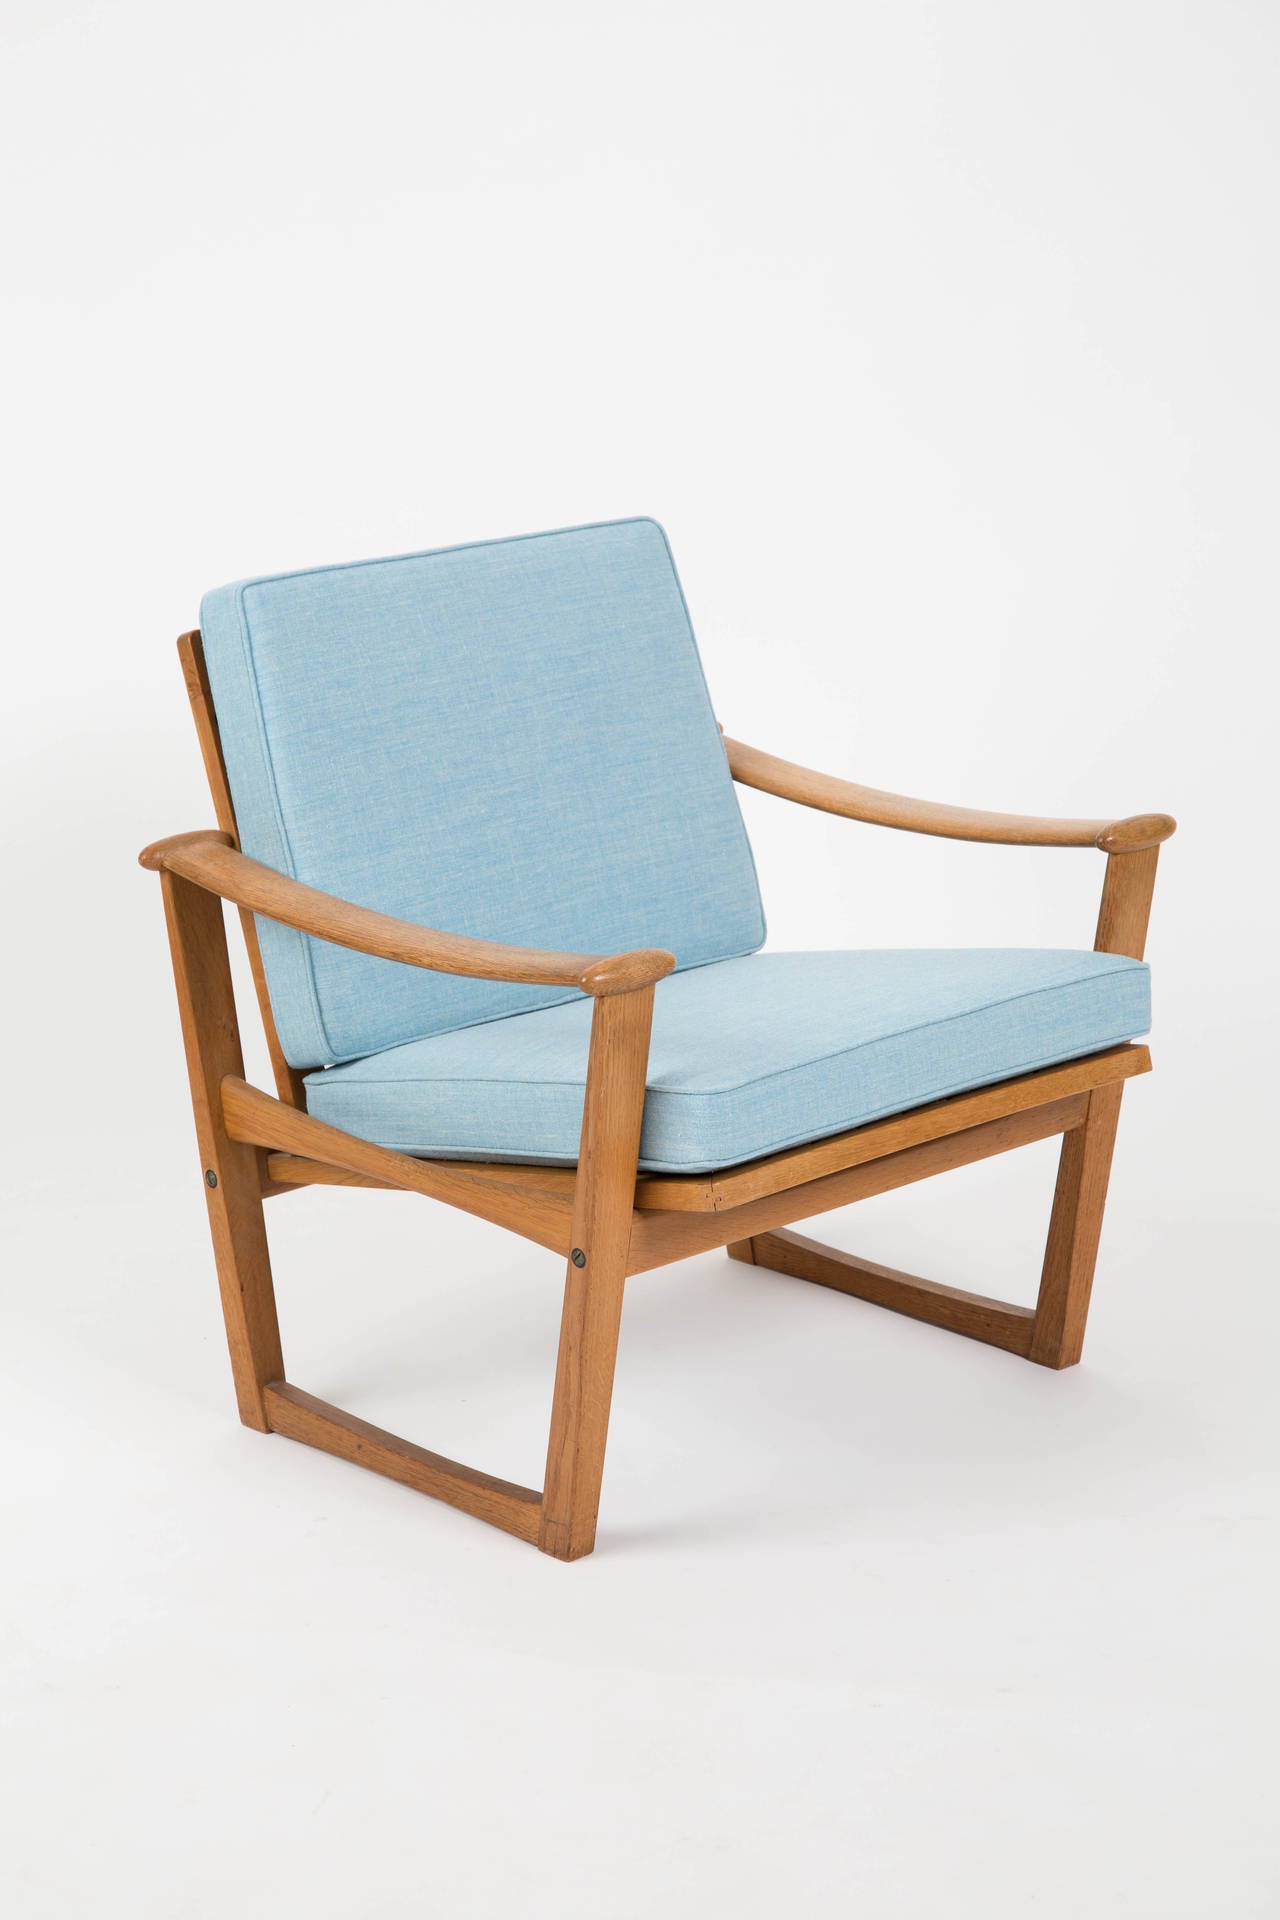 Dutch In the style of Finn Juhl Set of Oak Chairs for Pastoe designed by Nissen For Sale